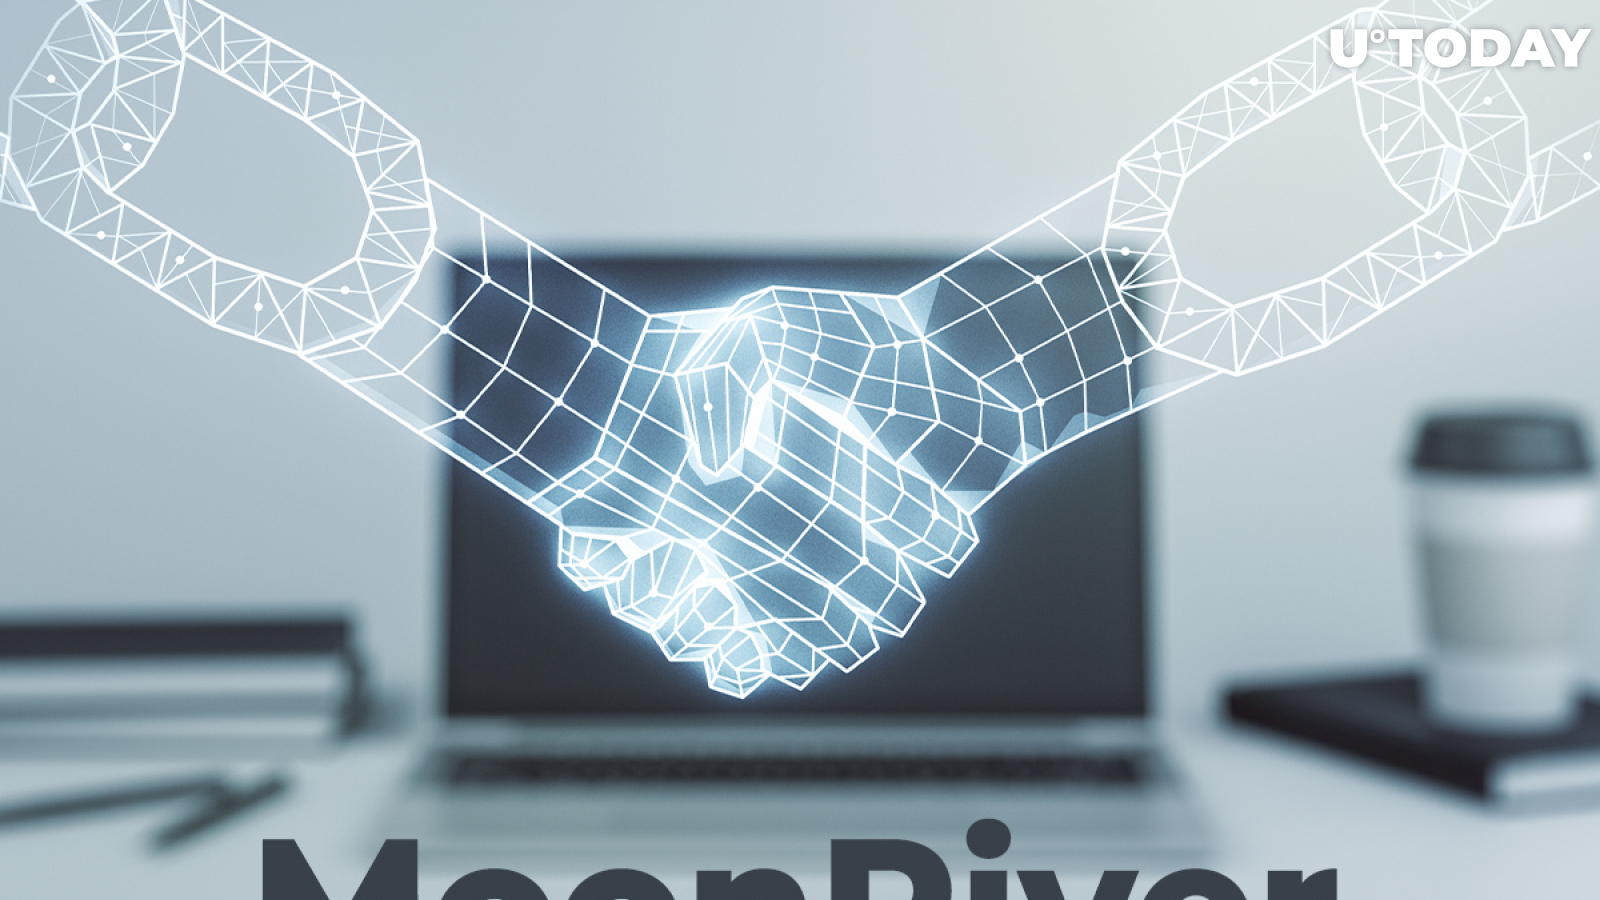 Moonriver (MOVR) Smart Contracts Platform Goes Live On Polkadot's Kusama